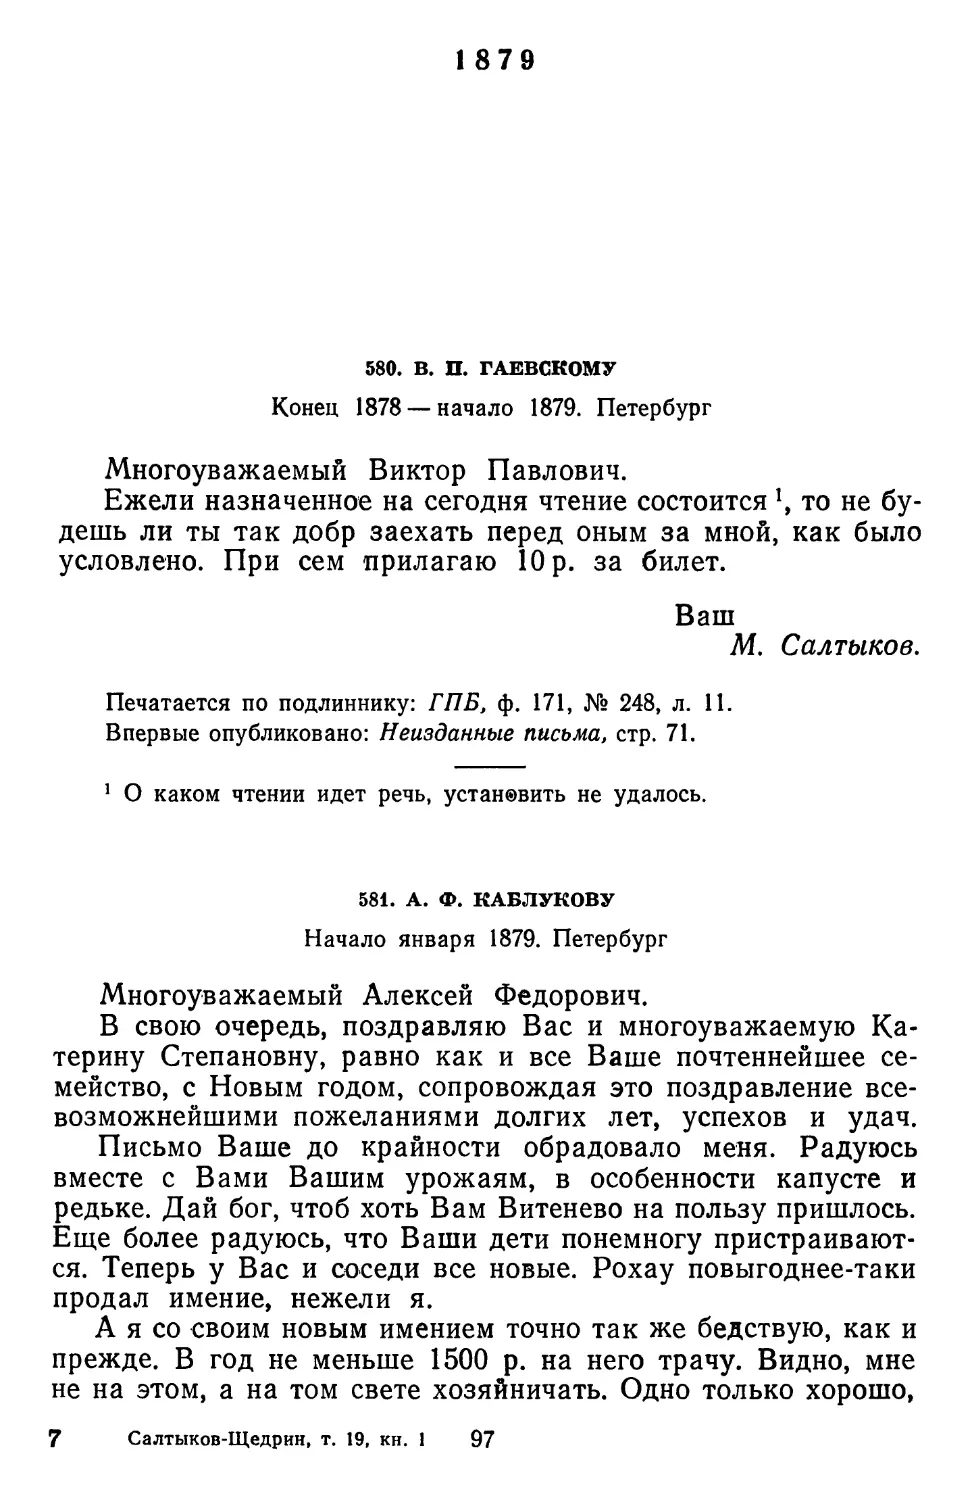 1879
581.А.Ф. Каблукову. Начало января 1879. Петербург